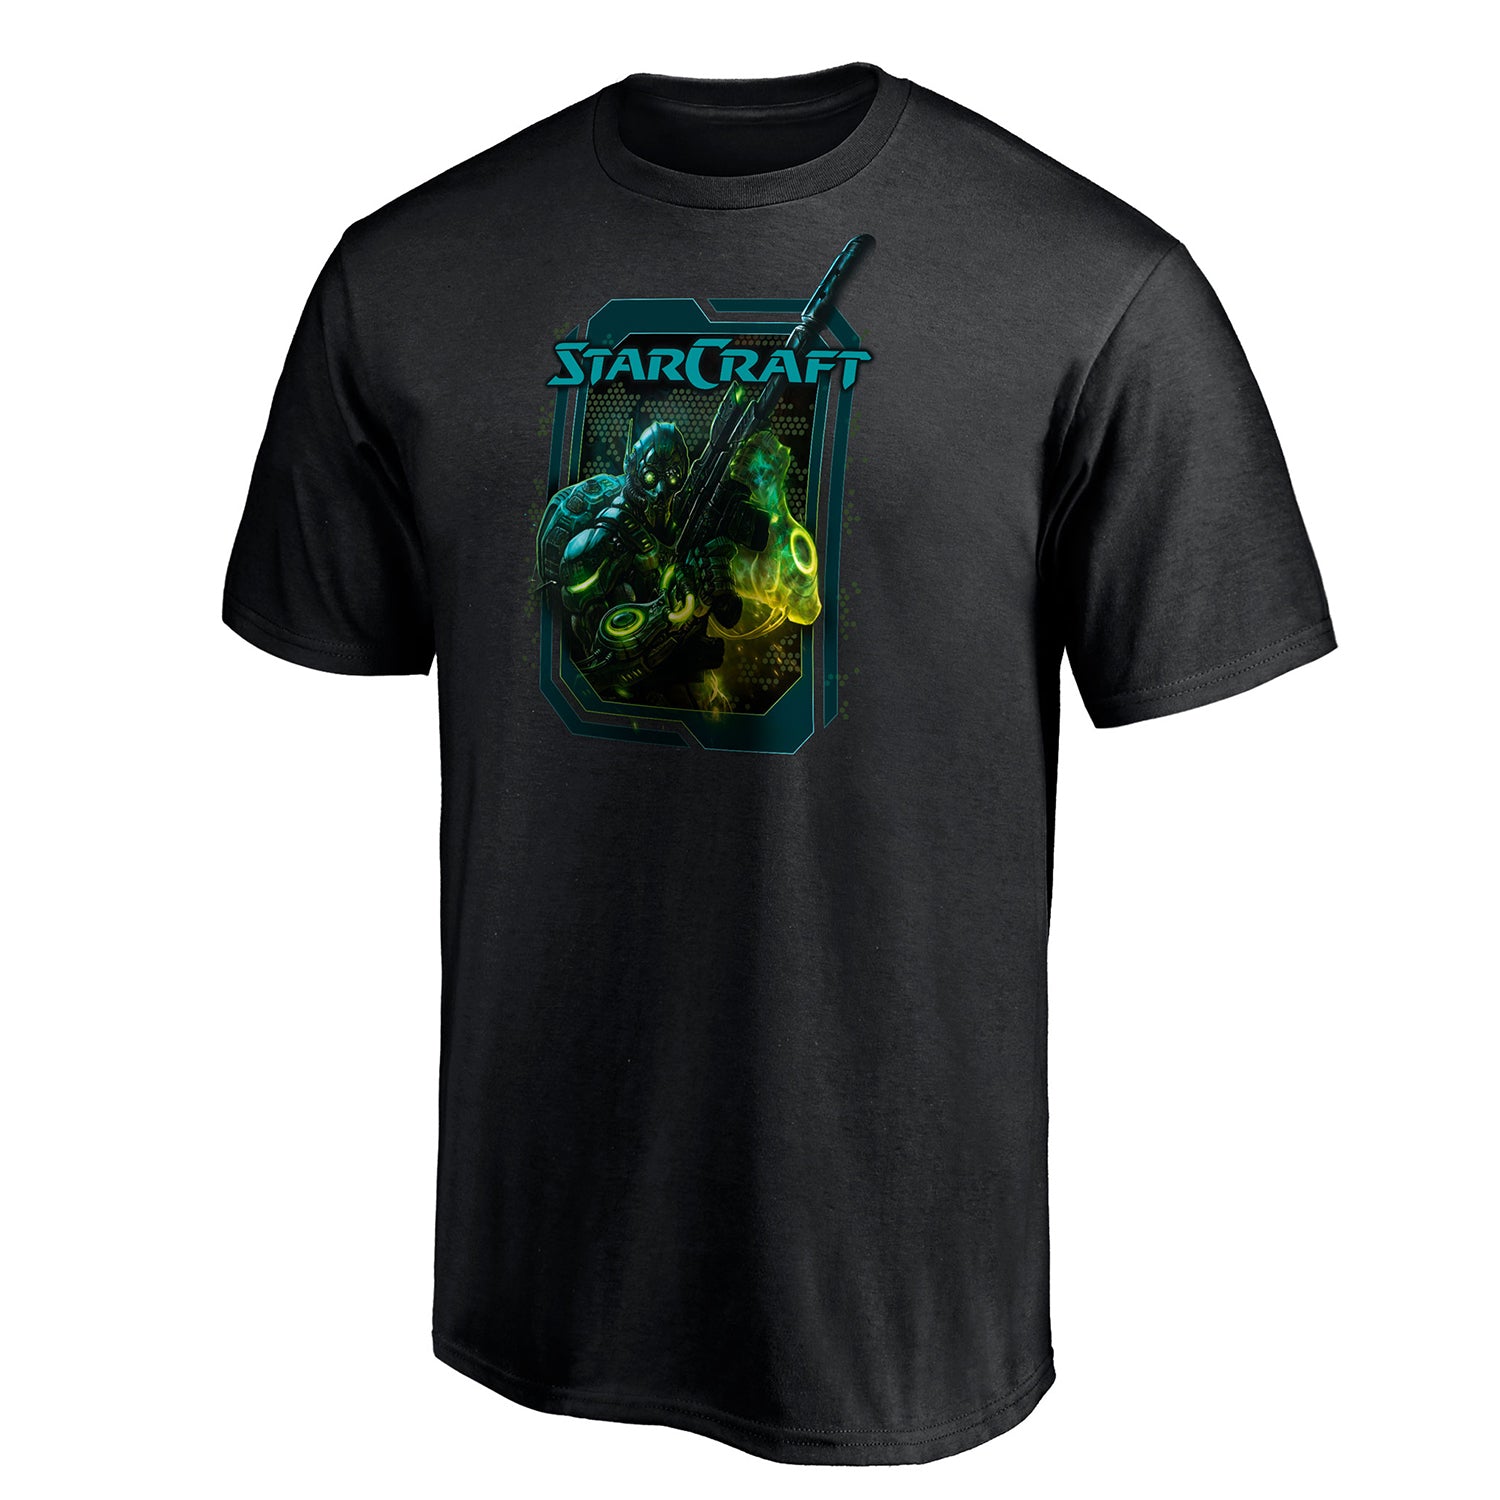 StarCraft Black Rectangle T-Shirt - Front View